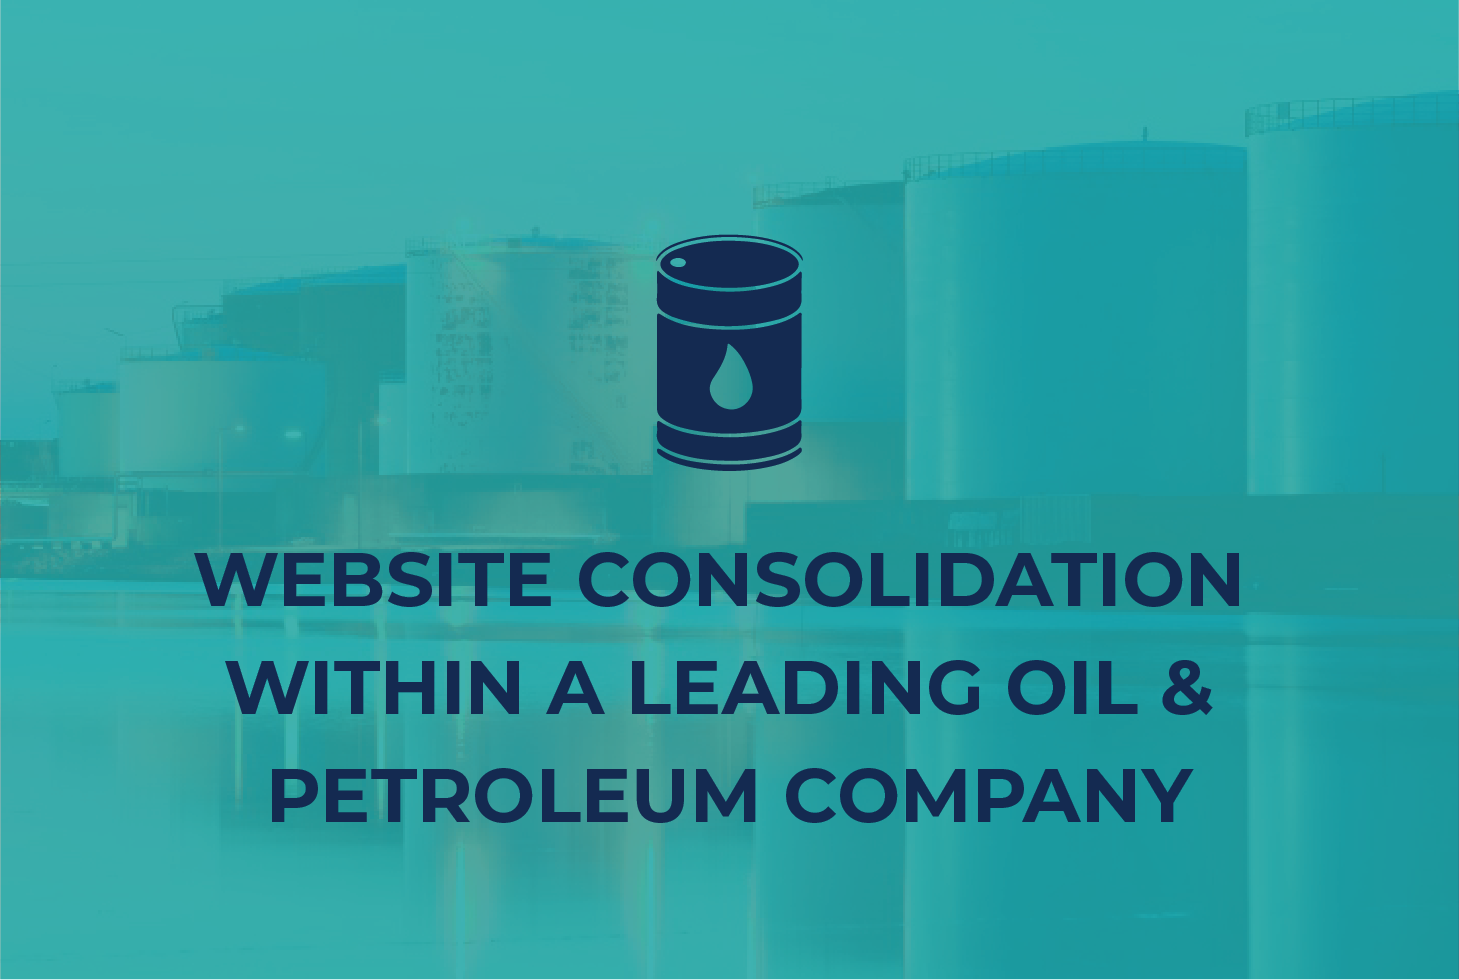 Oil & Petroleum Company